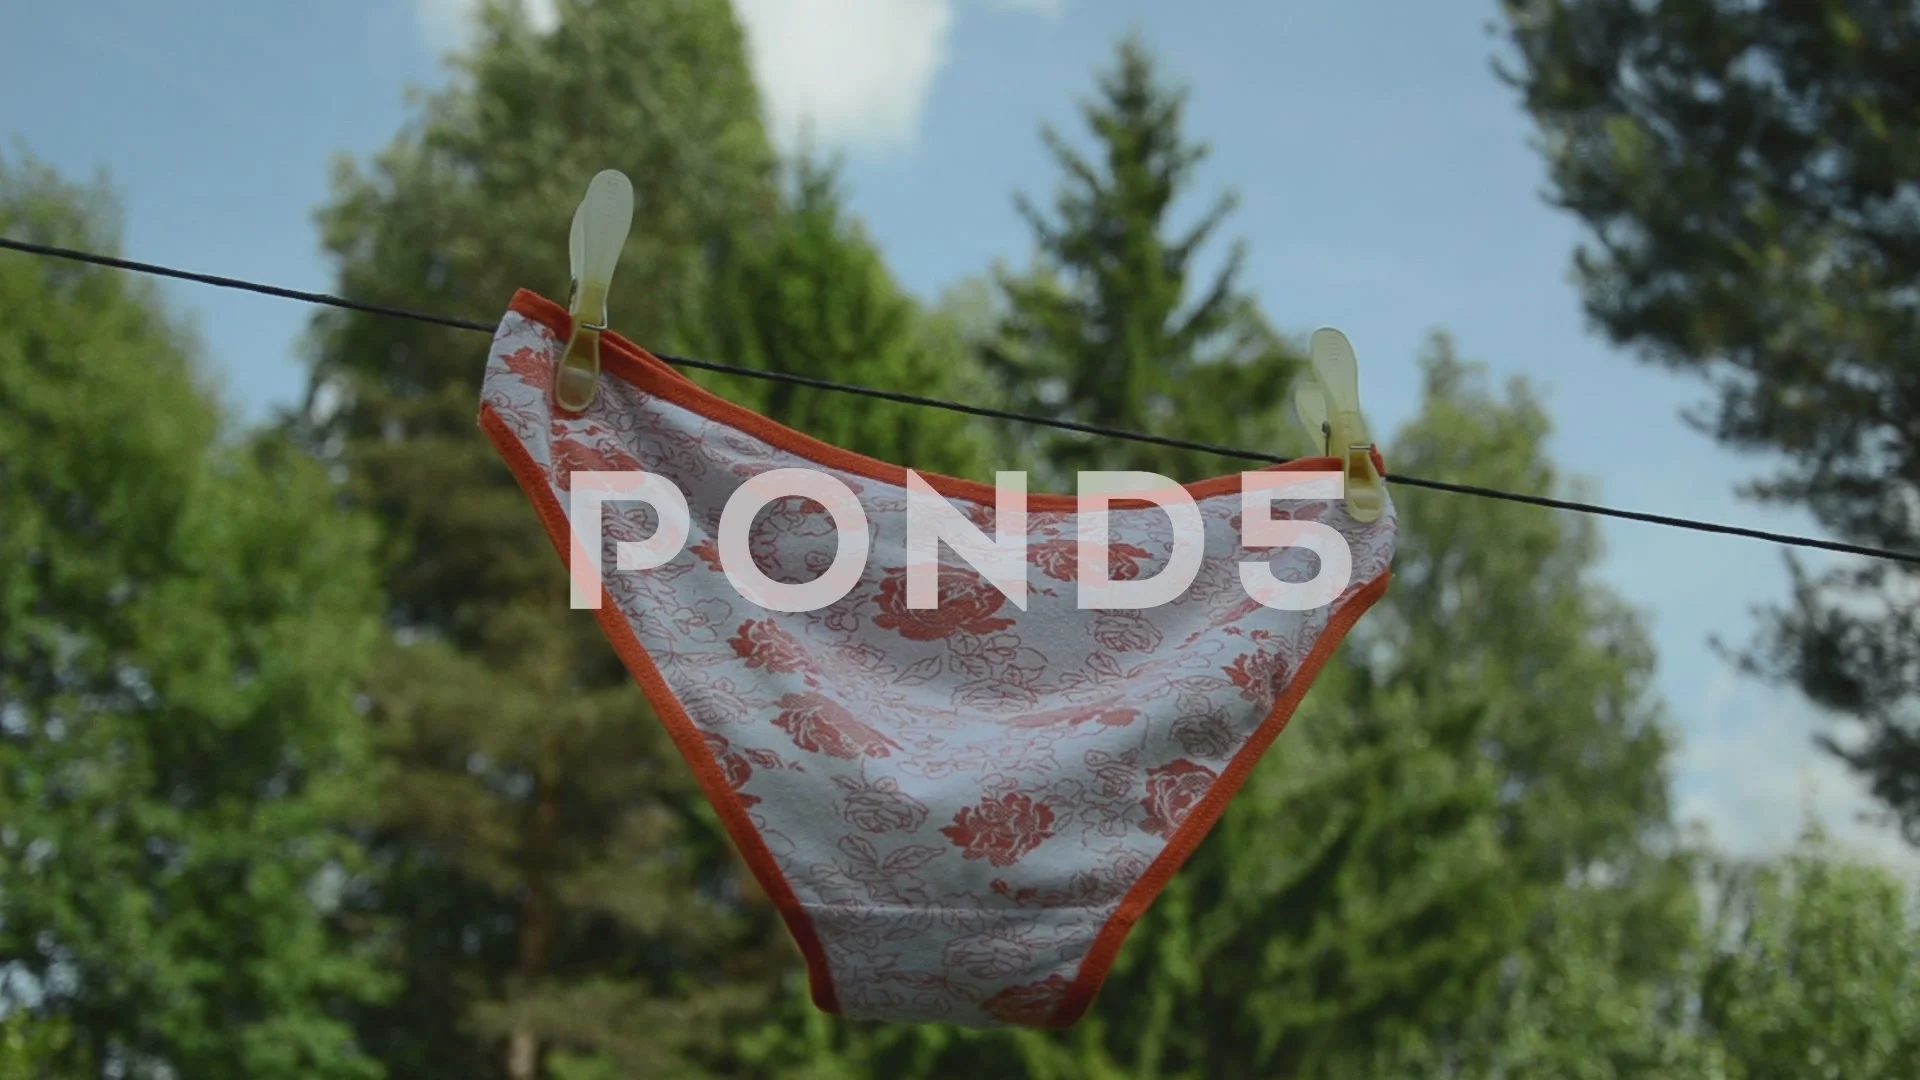 Woman girl panties hang dry on rope clip, Stock Video